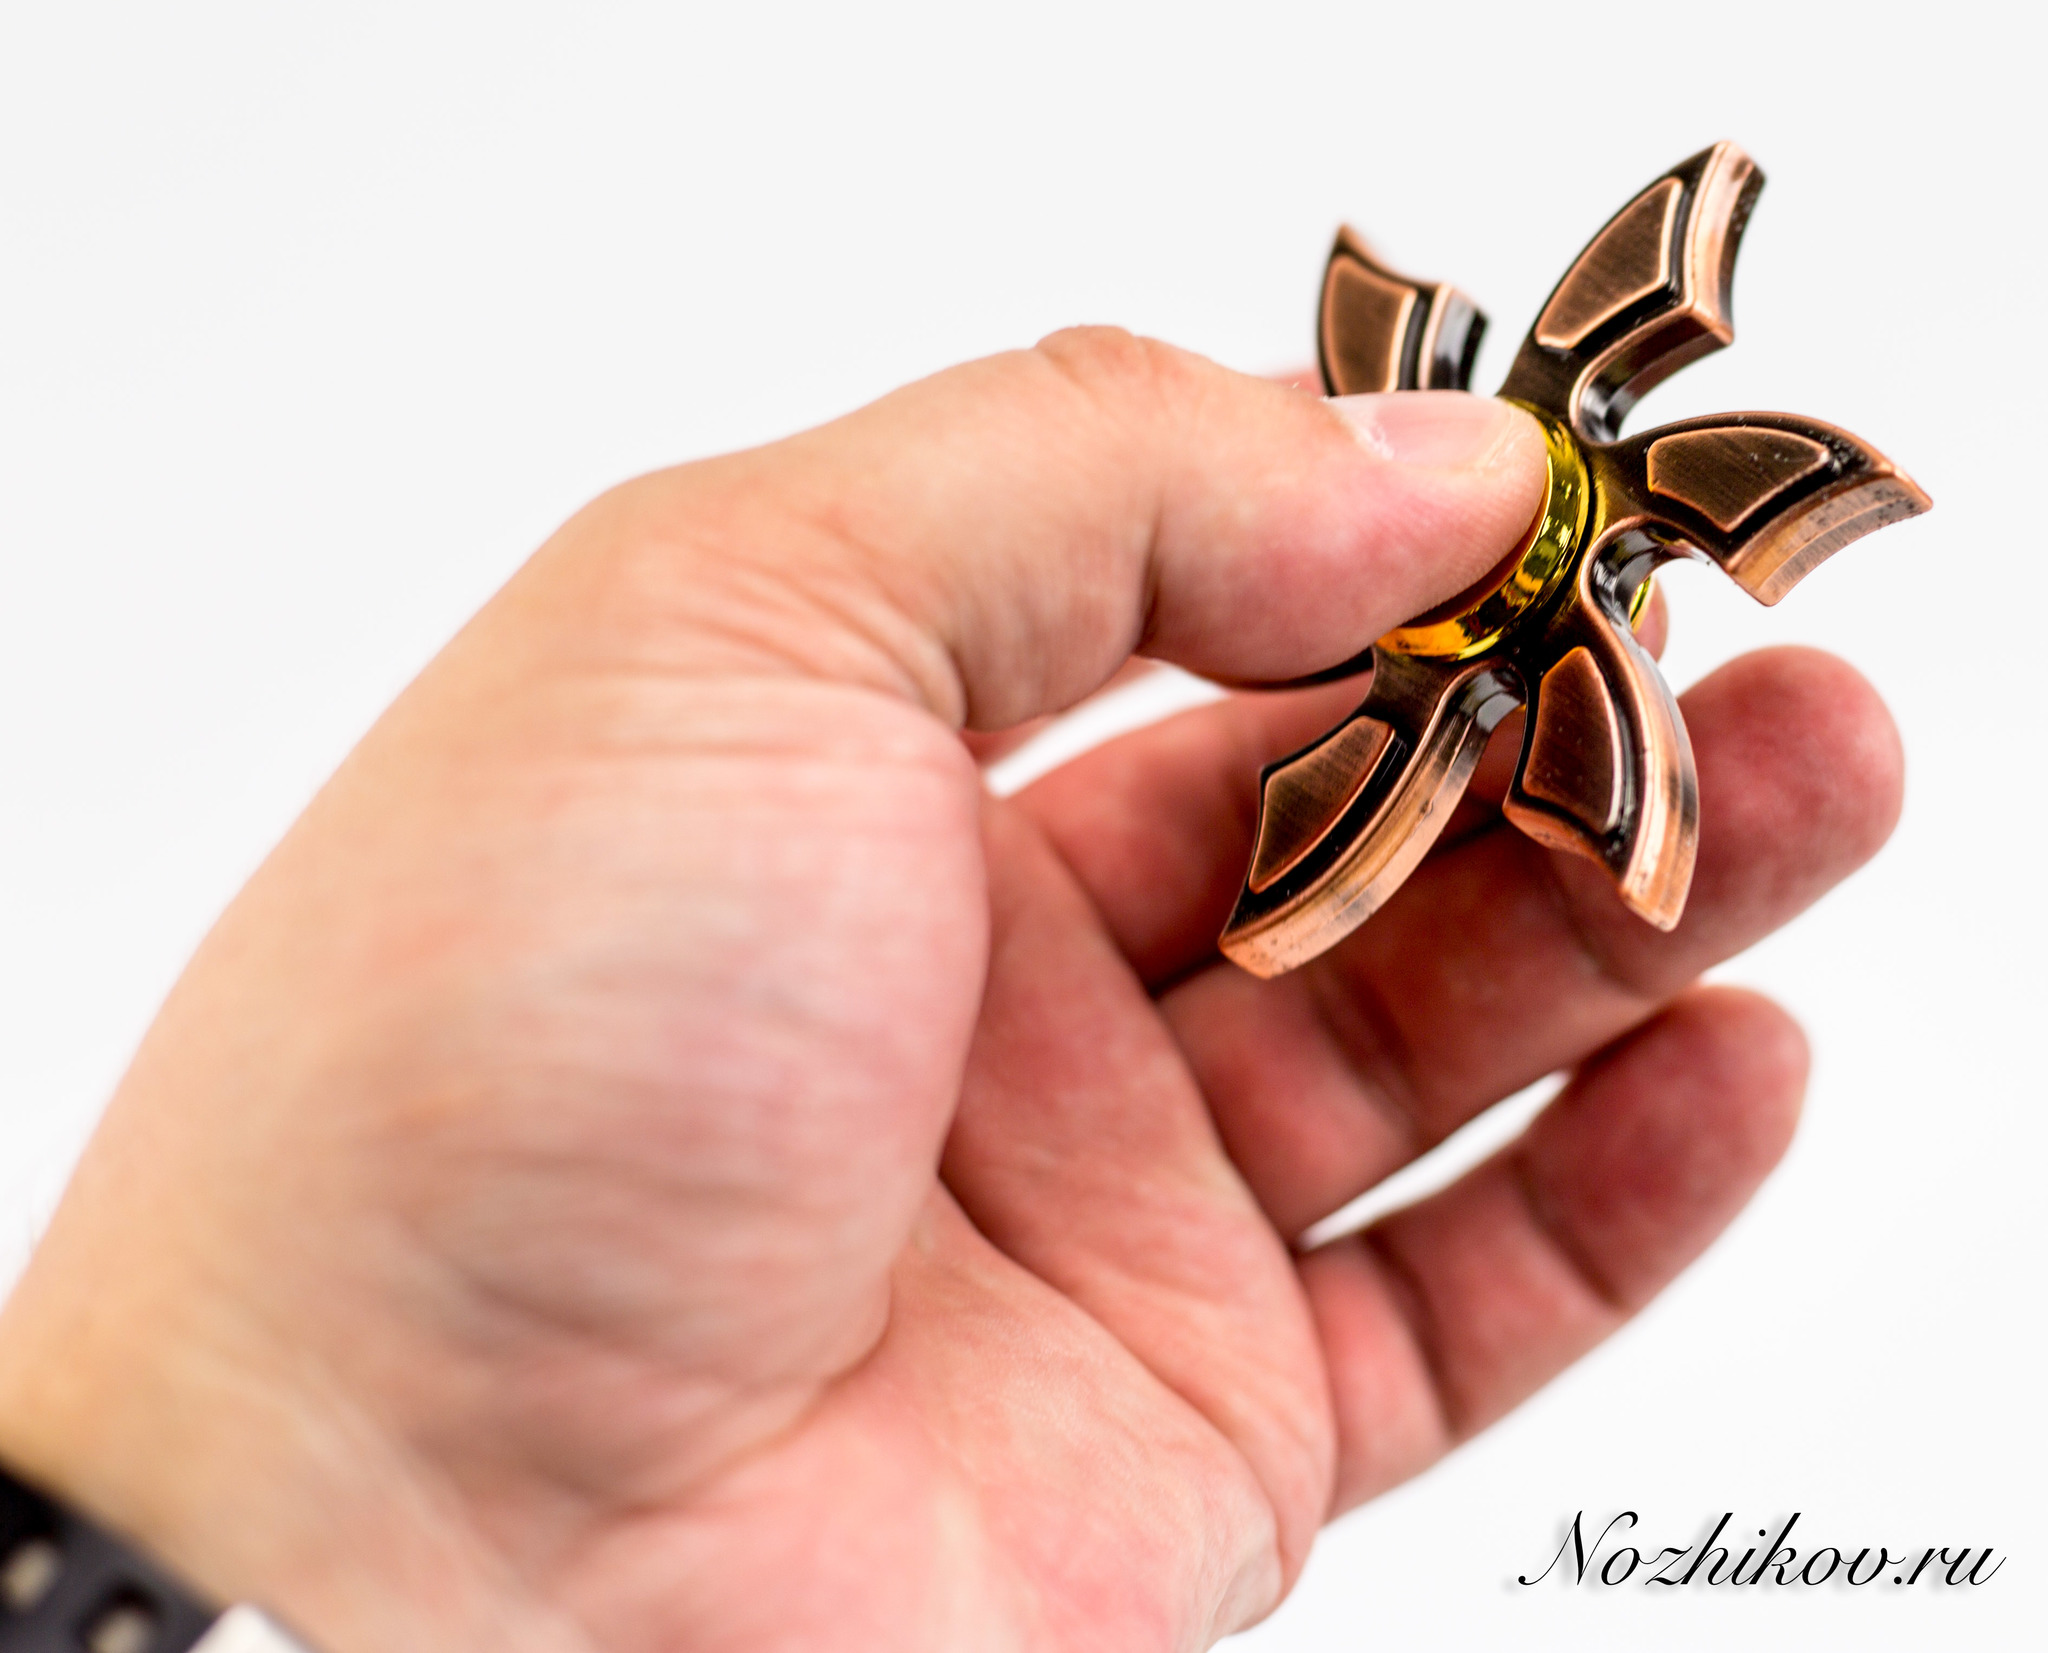 Спиннер (Hand Spinner) Медный цветок - фото 6